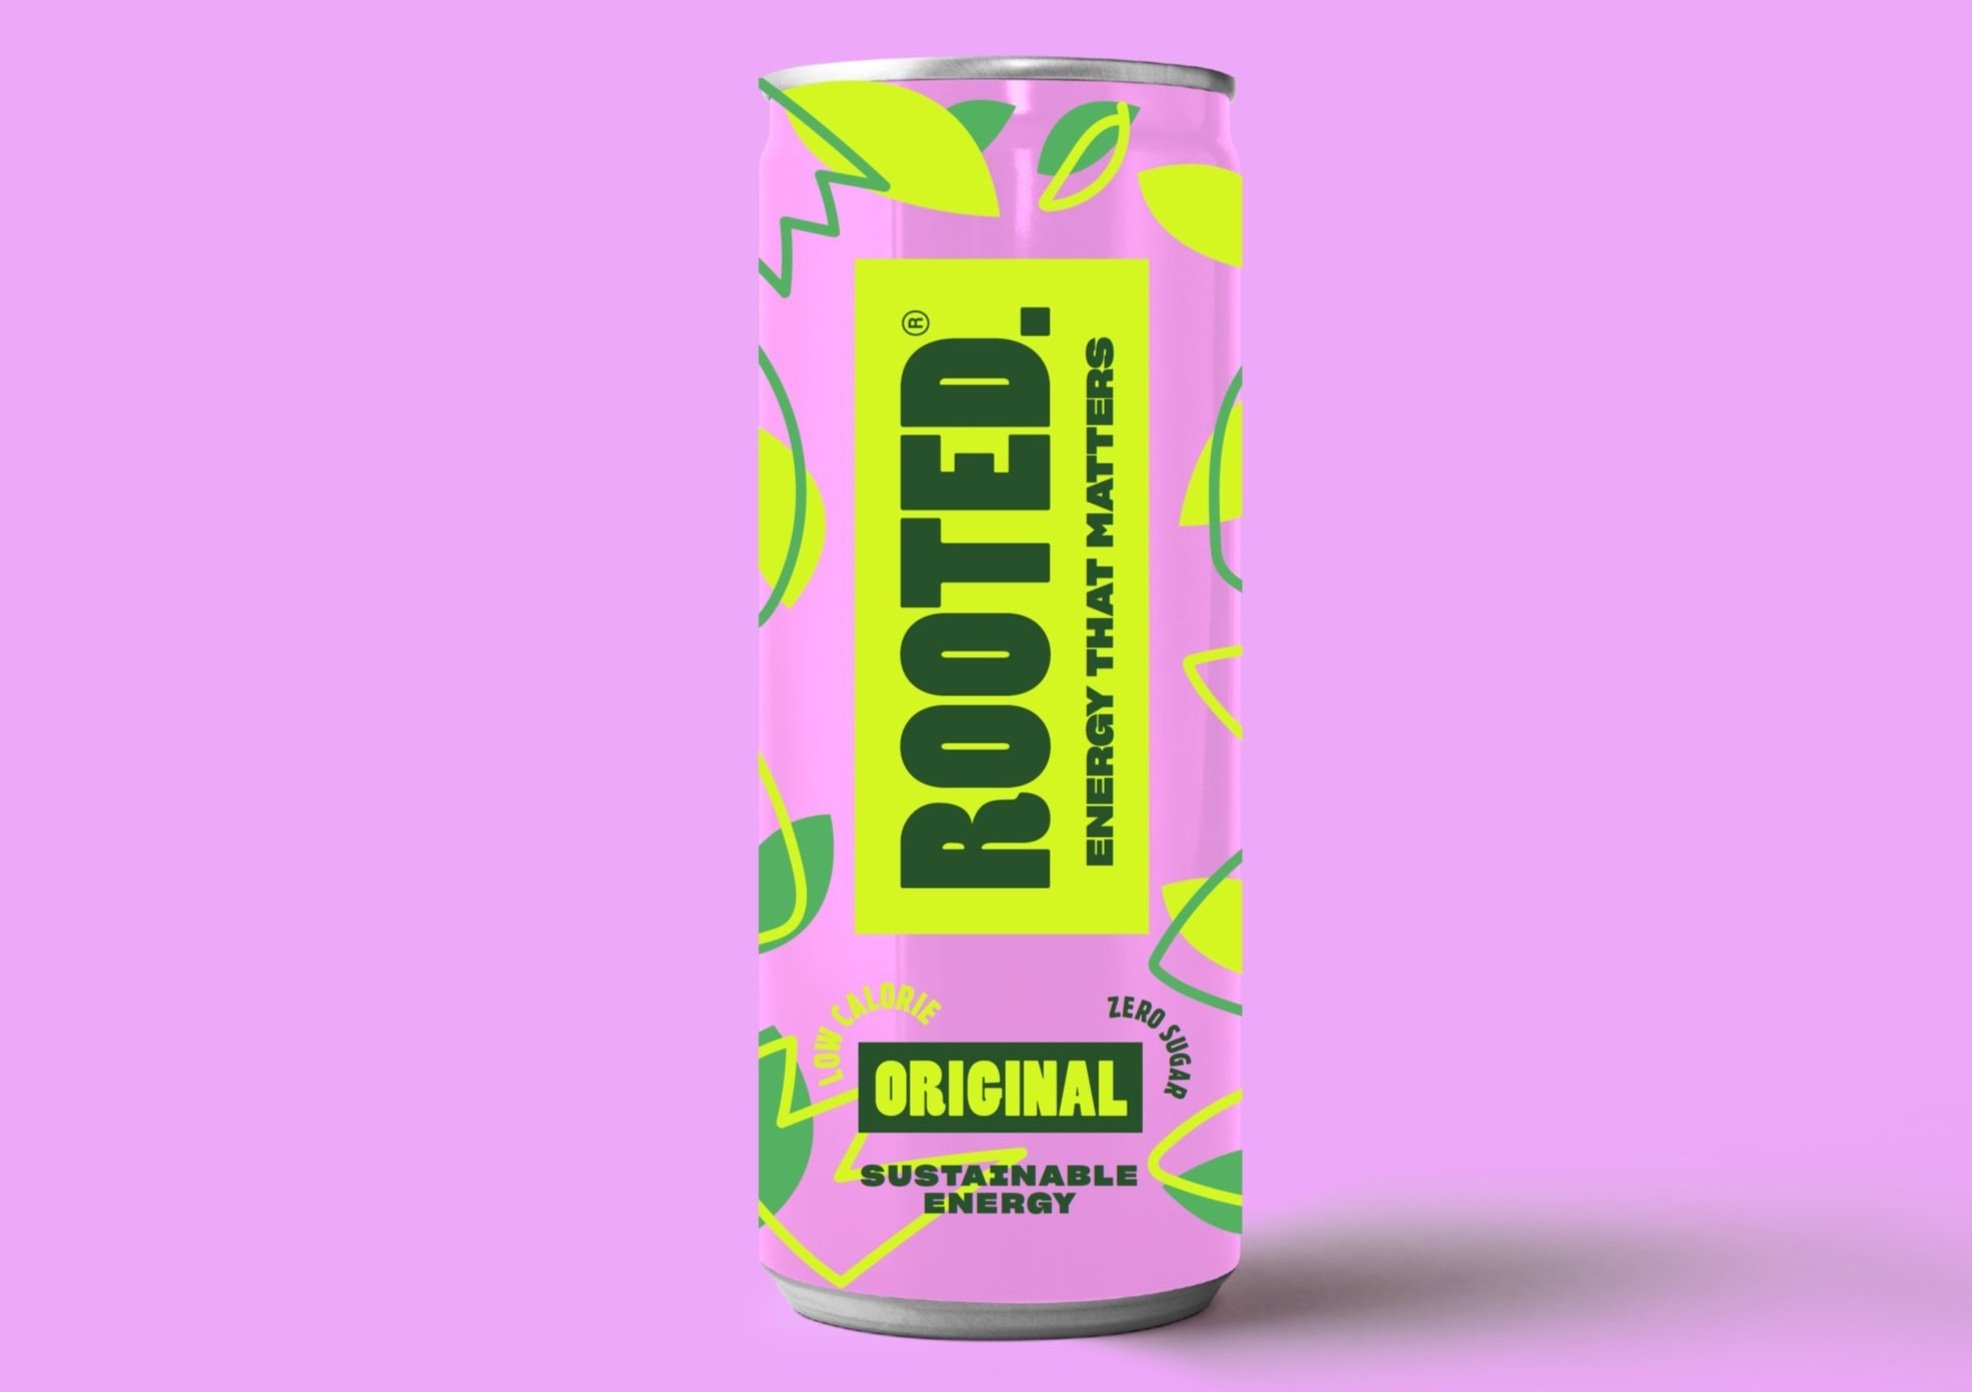 Packaging-designer-Energy drink packaging design - Rooted natural energy drink